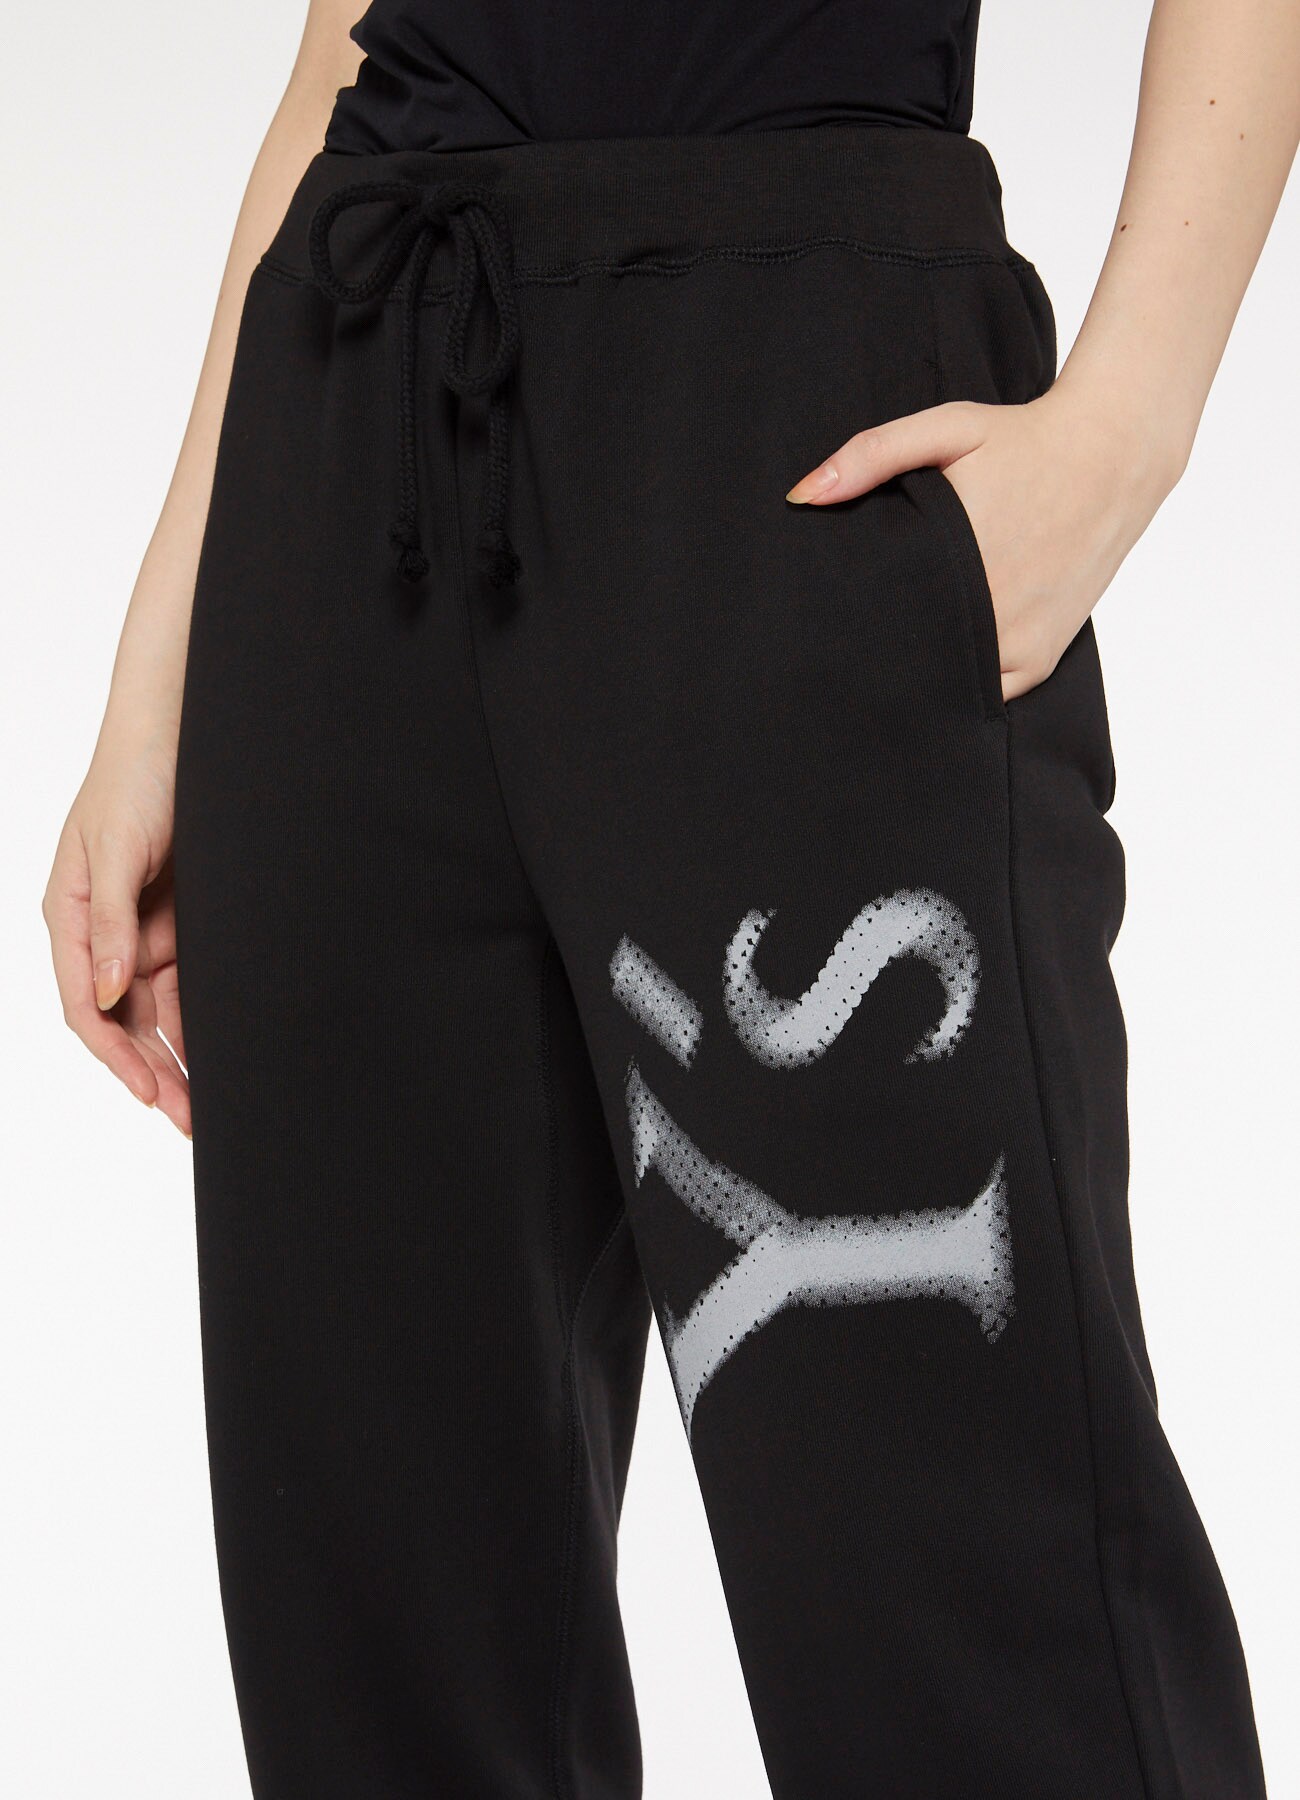 Online EXCLUSIVE-Y's logo Track pants (S Black): Y's ｜ THE SHOP 